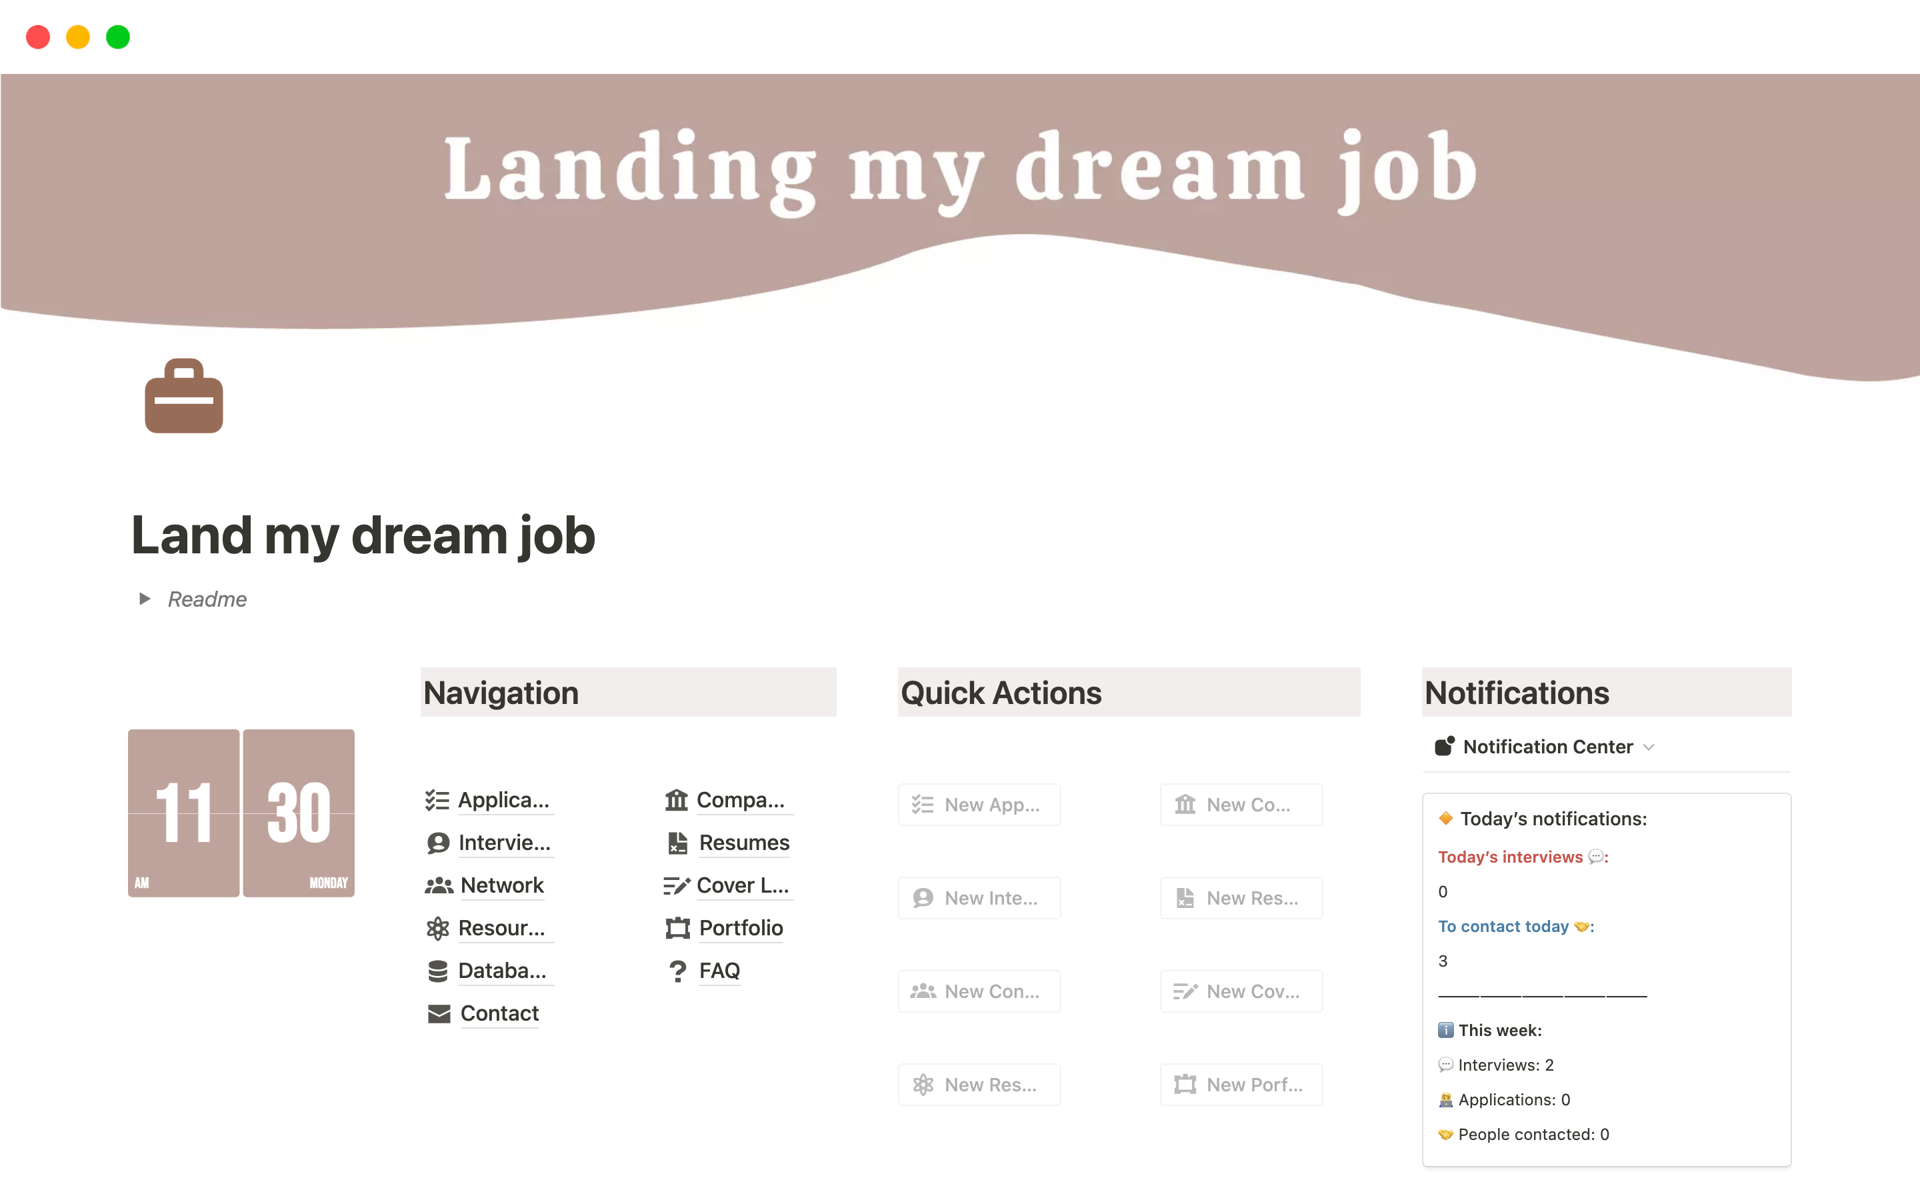 Job Search, Interviews & Applications Tracker님의 템플릿 미리보기